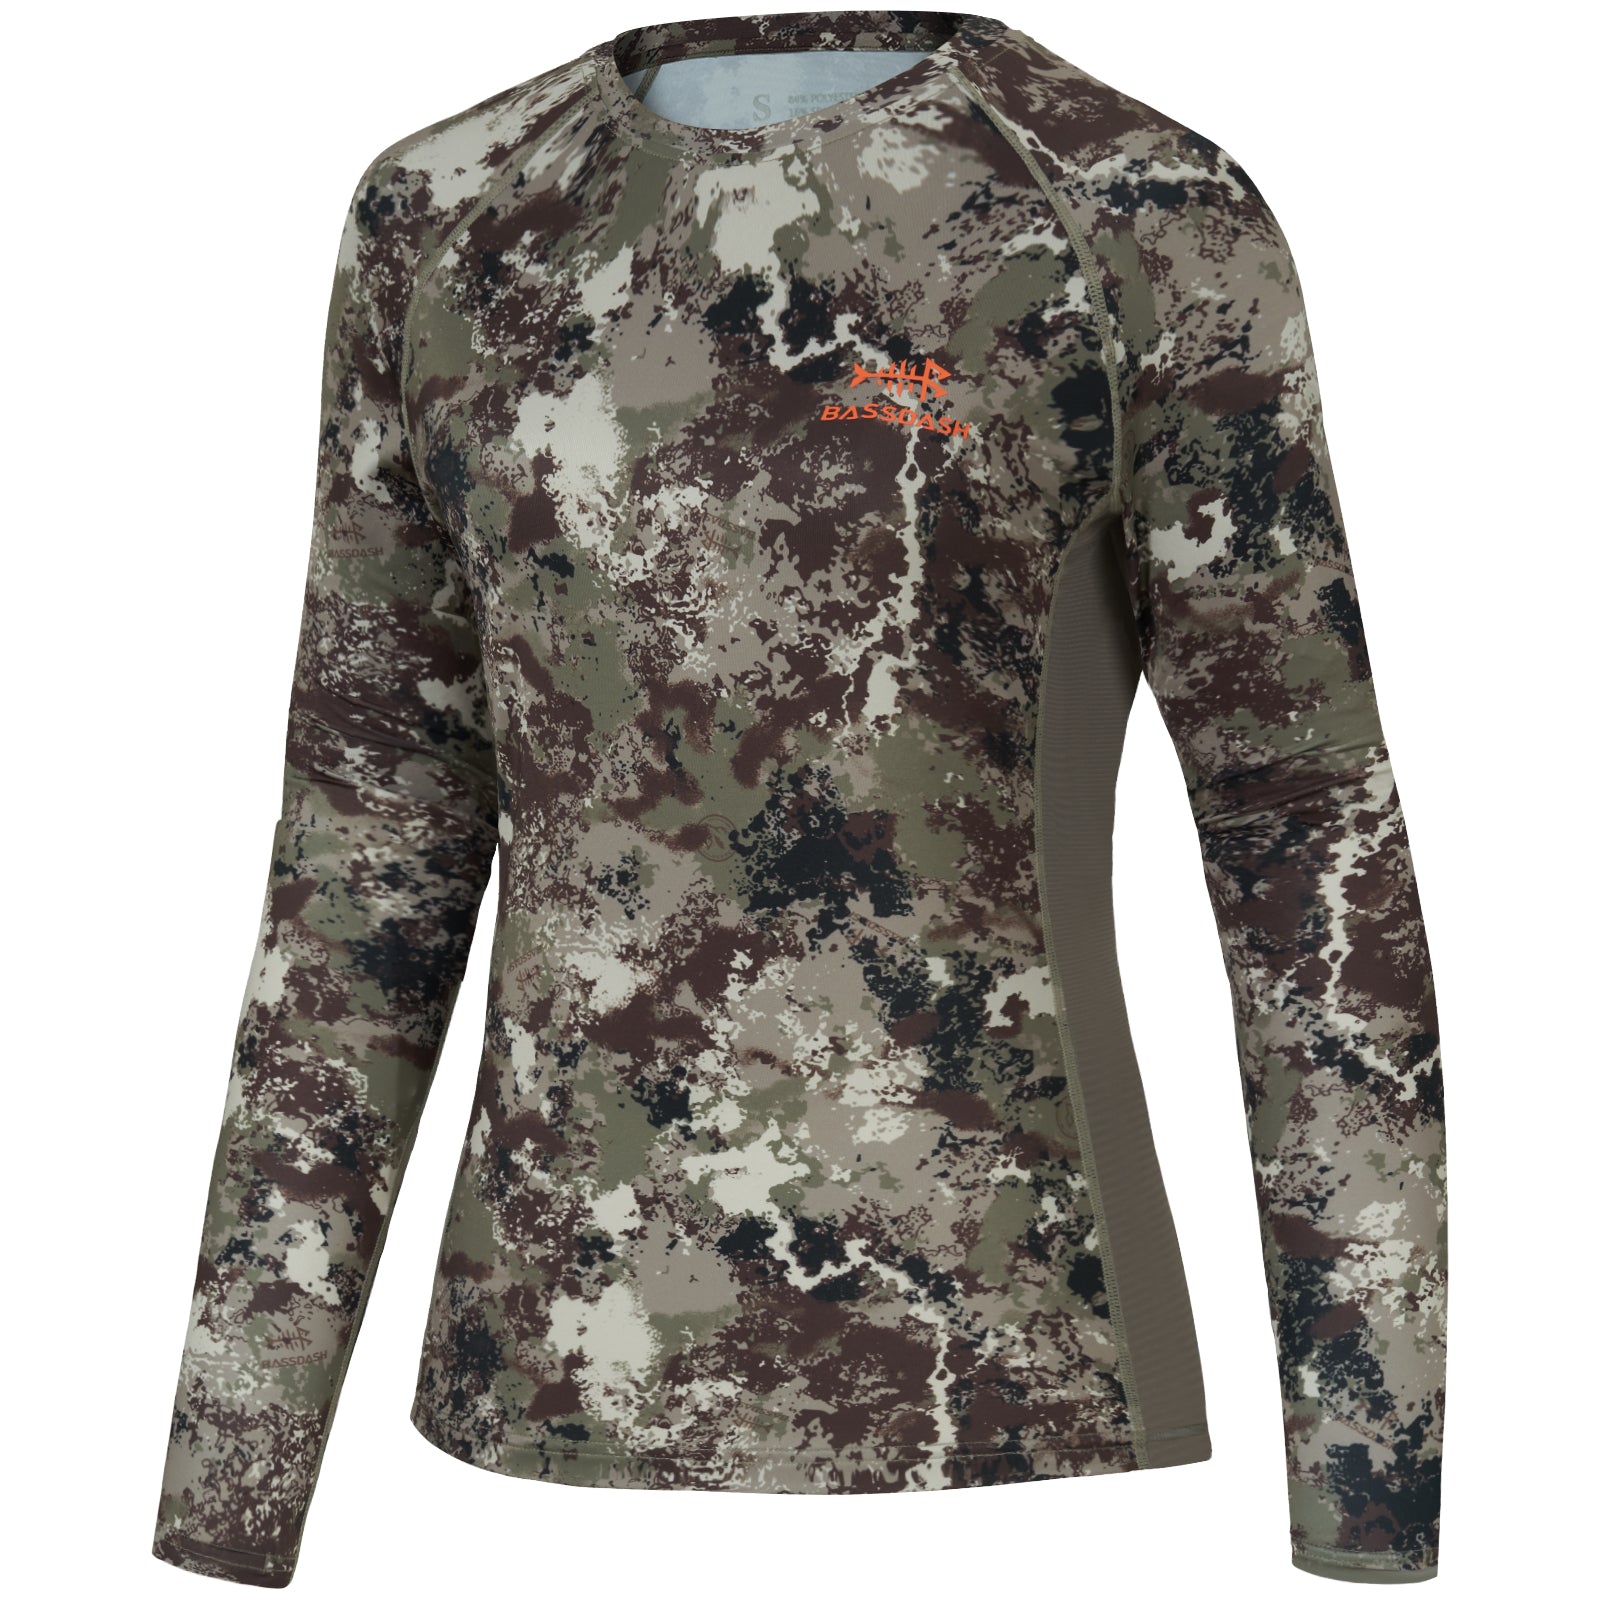 Women's Hunting Camo Long Sleeve UV Shirts FS13W, Grunge Camo / XX-Large